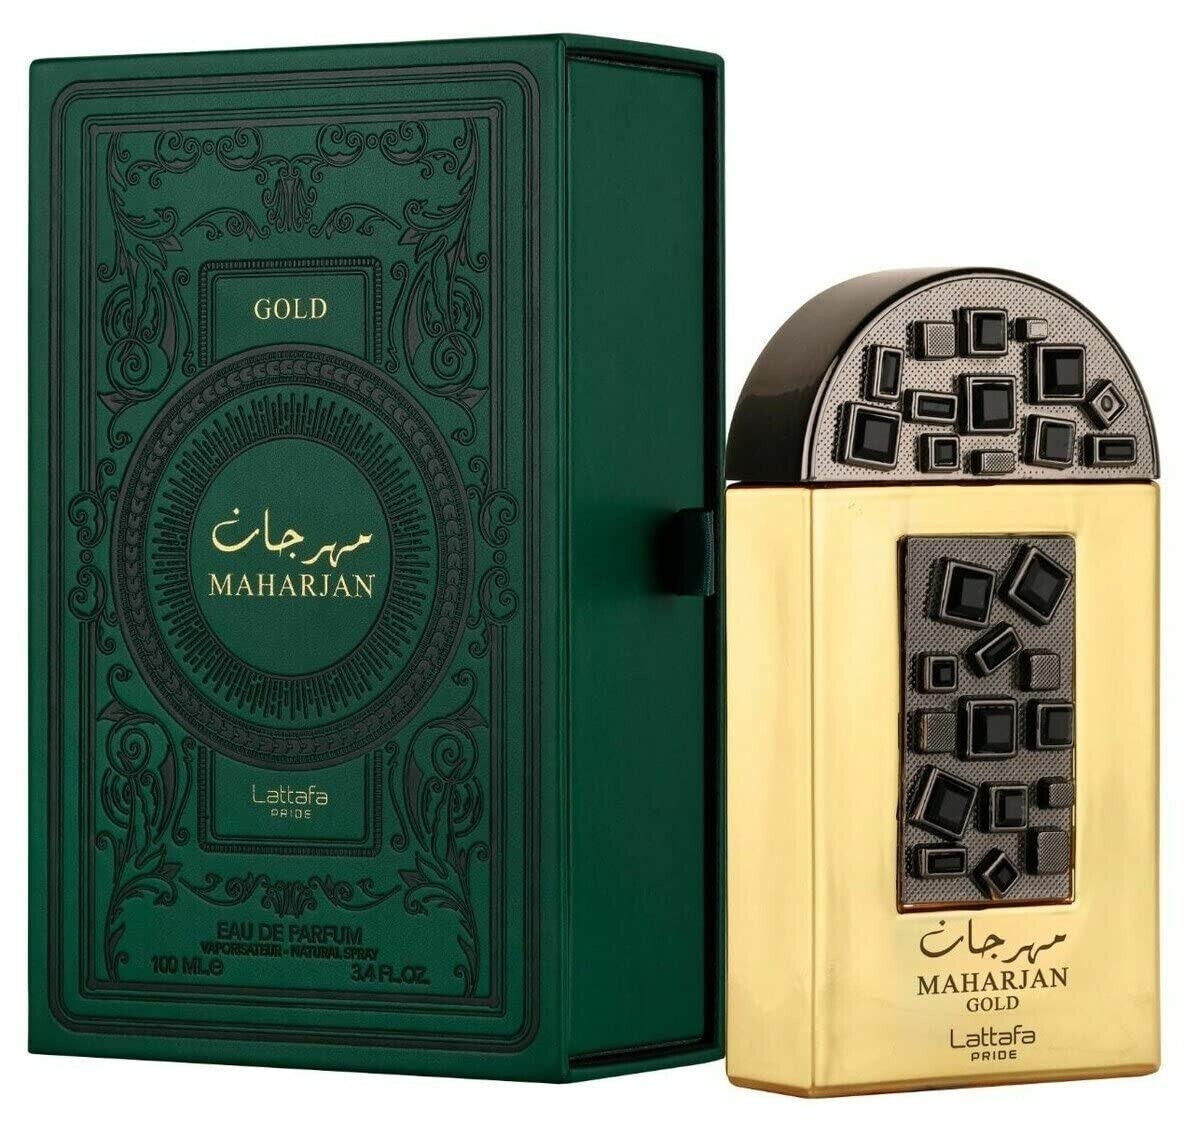 Pride Maharjan Gold 100Ml Edp Unisex Lattafa Perfume